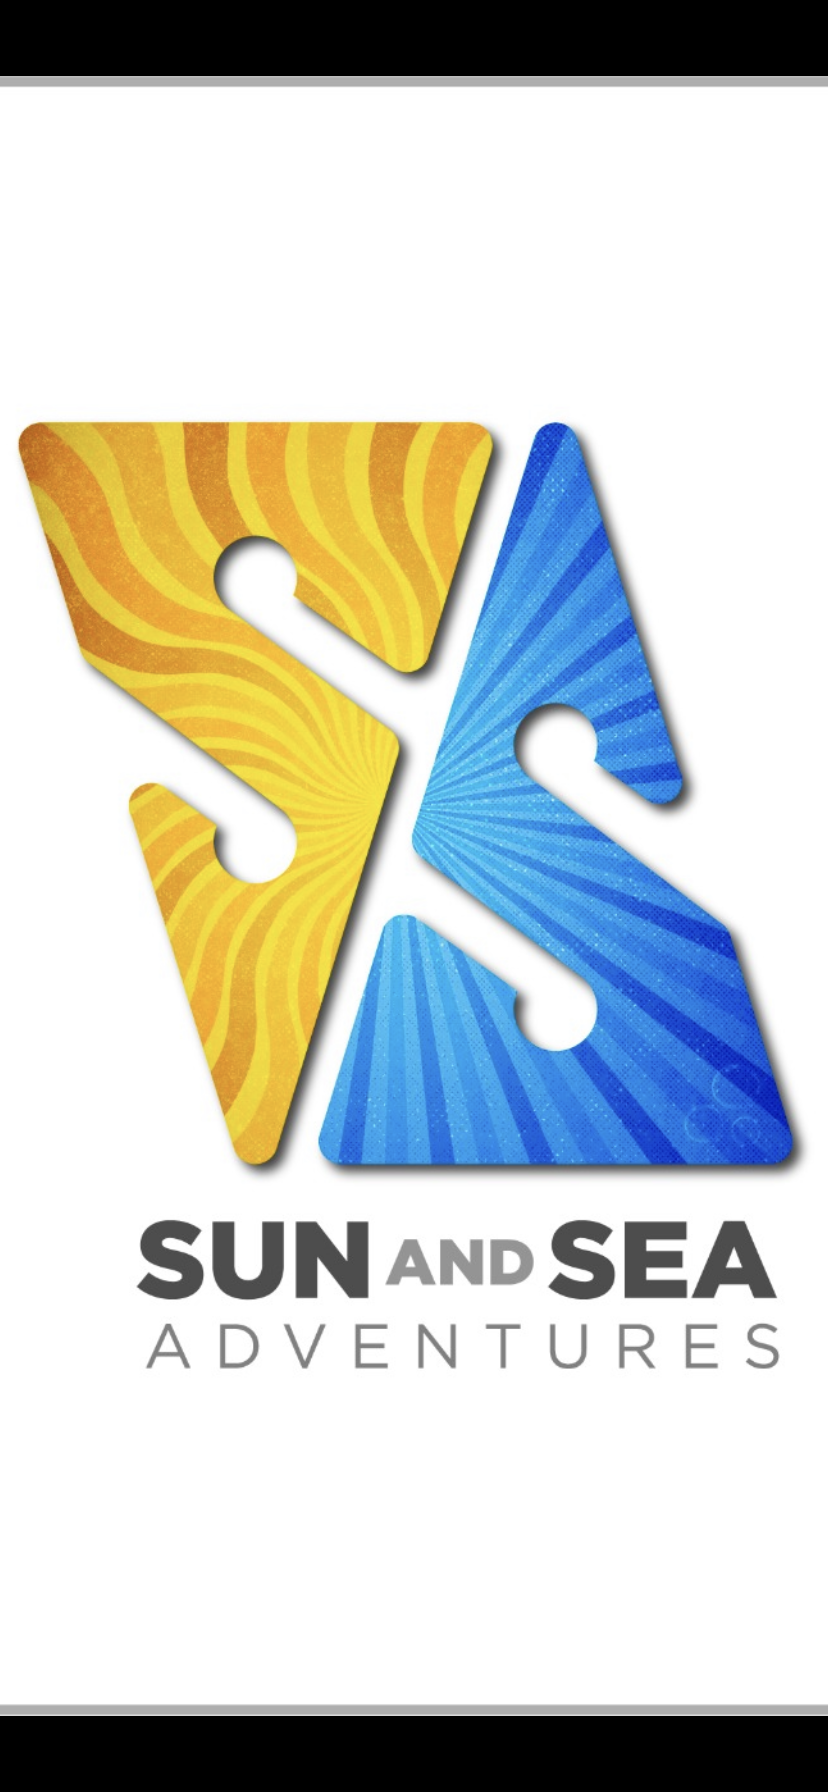 Sun and Sea Adventures